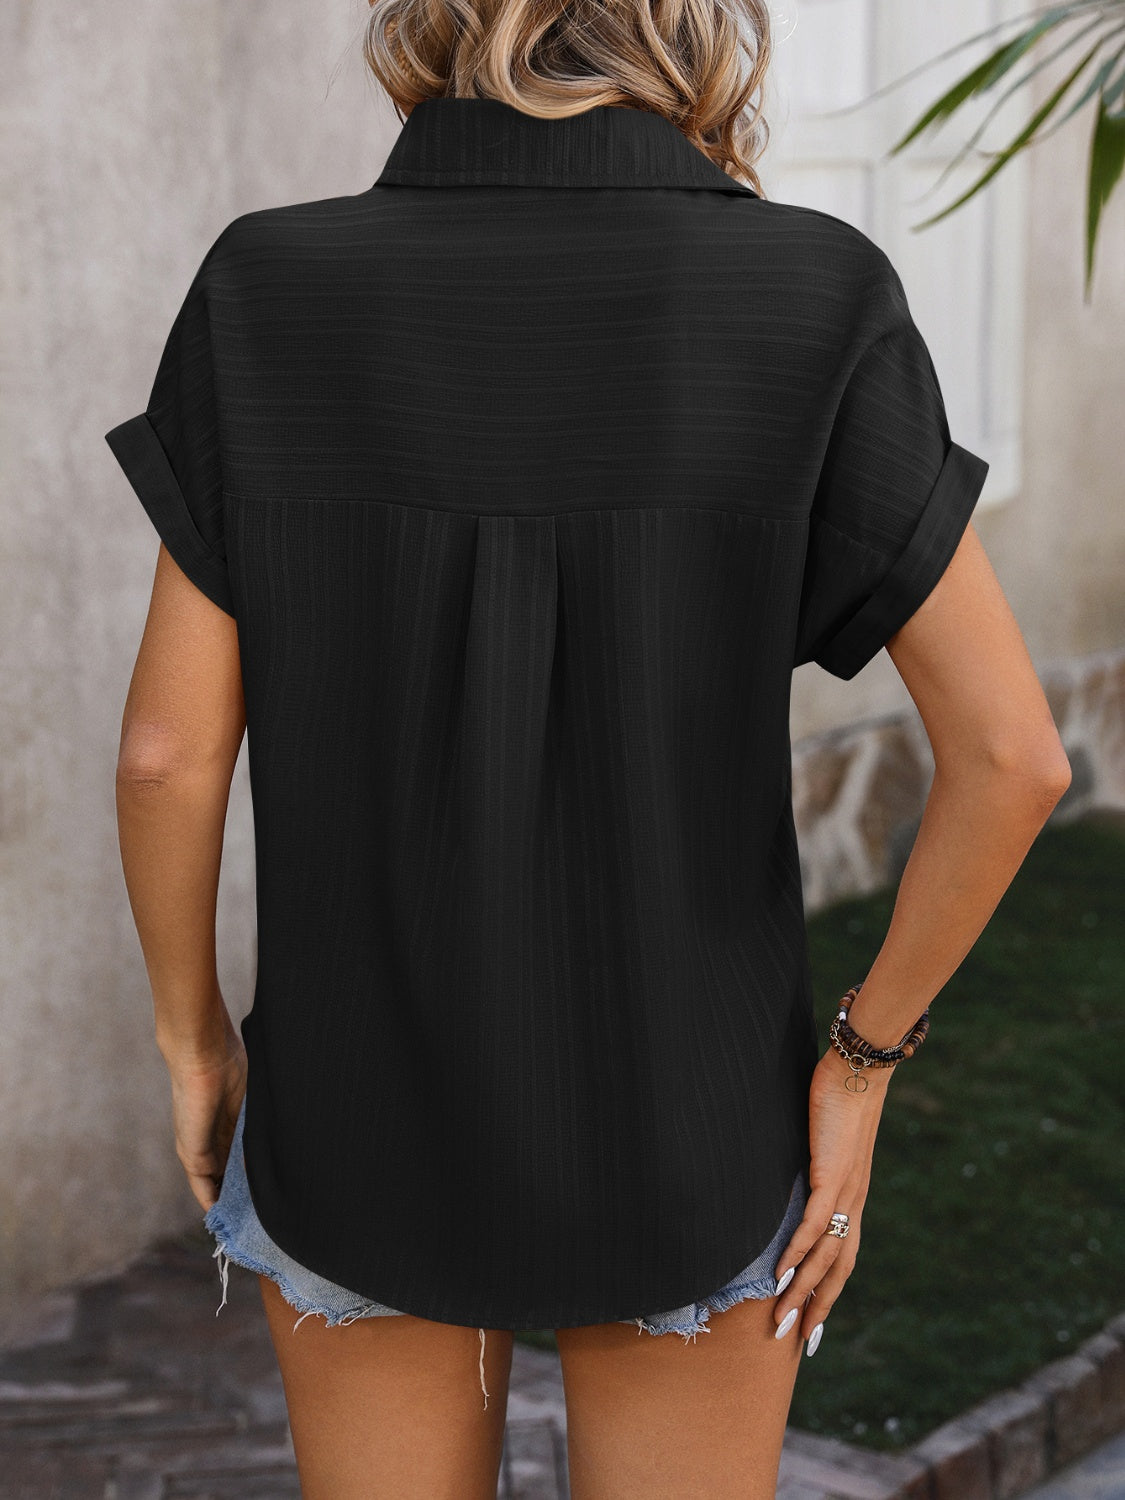 Textured Button Up Cap Sleeve Shirt (6 Colors) Shirts & Tops Krazy Heart Designs Boutique   